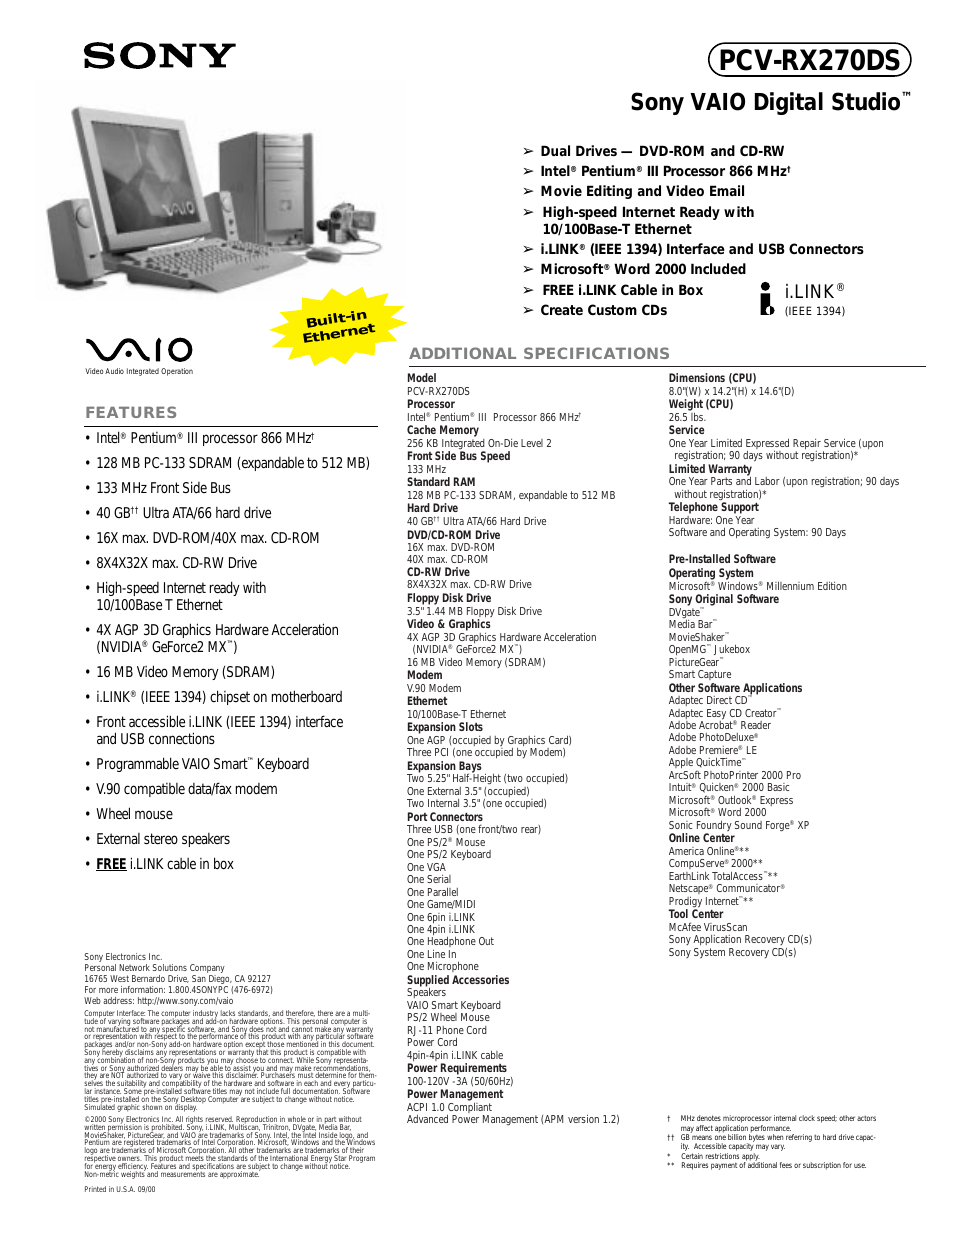 VAIO PCV-RX270DS